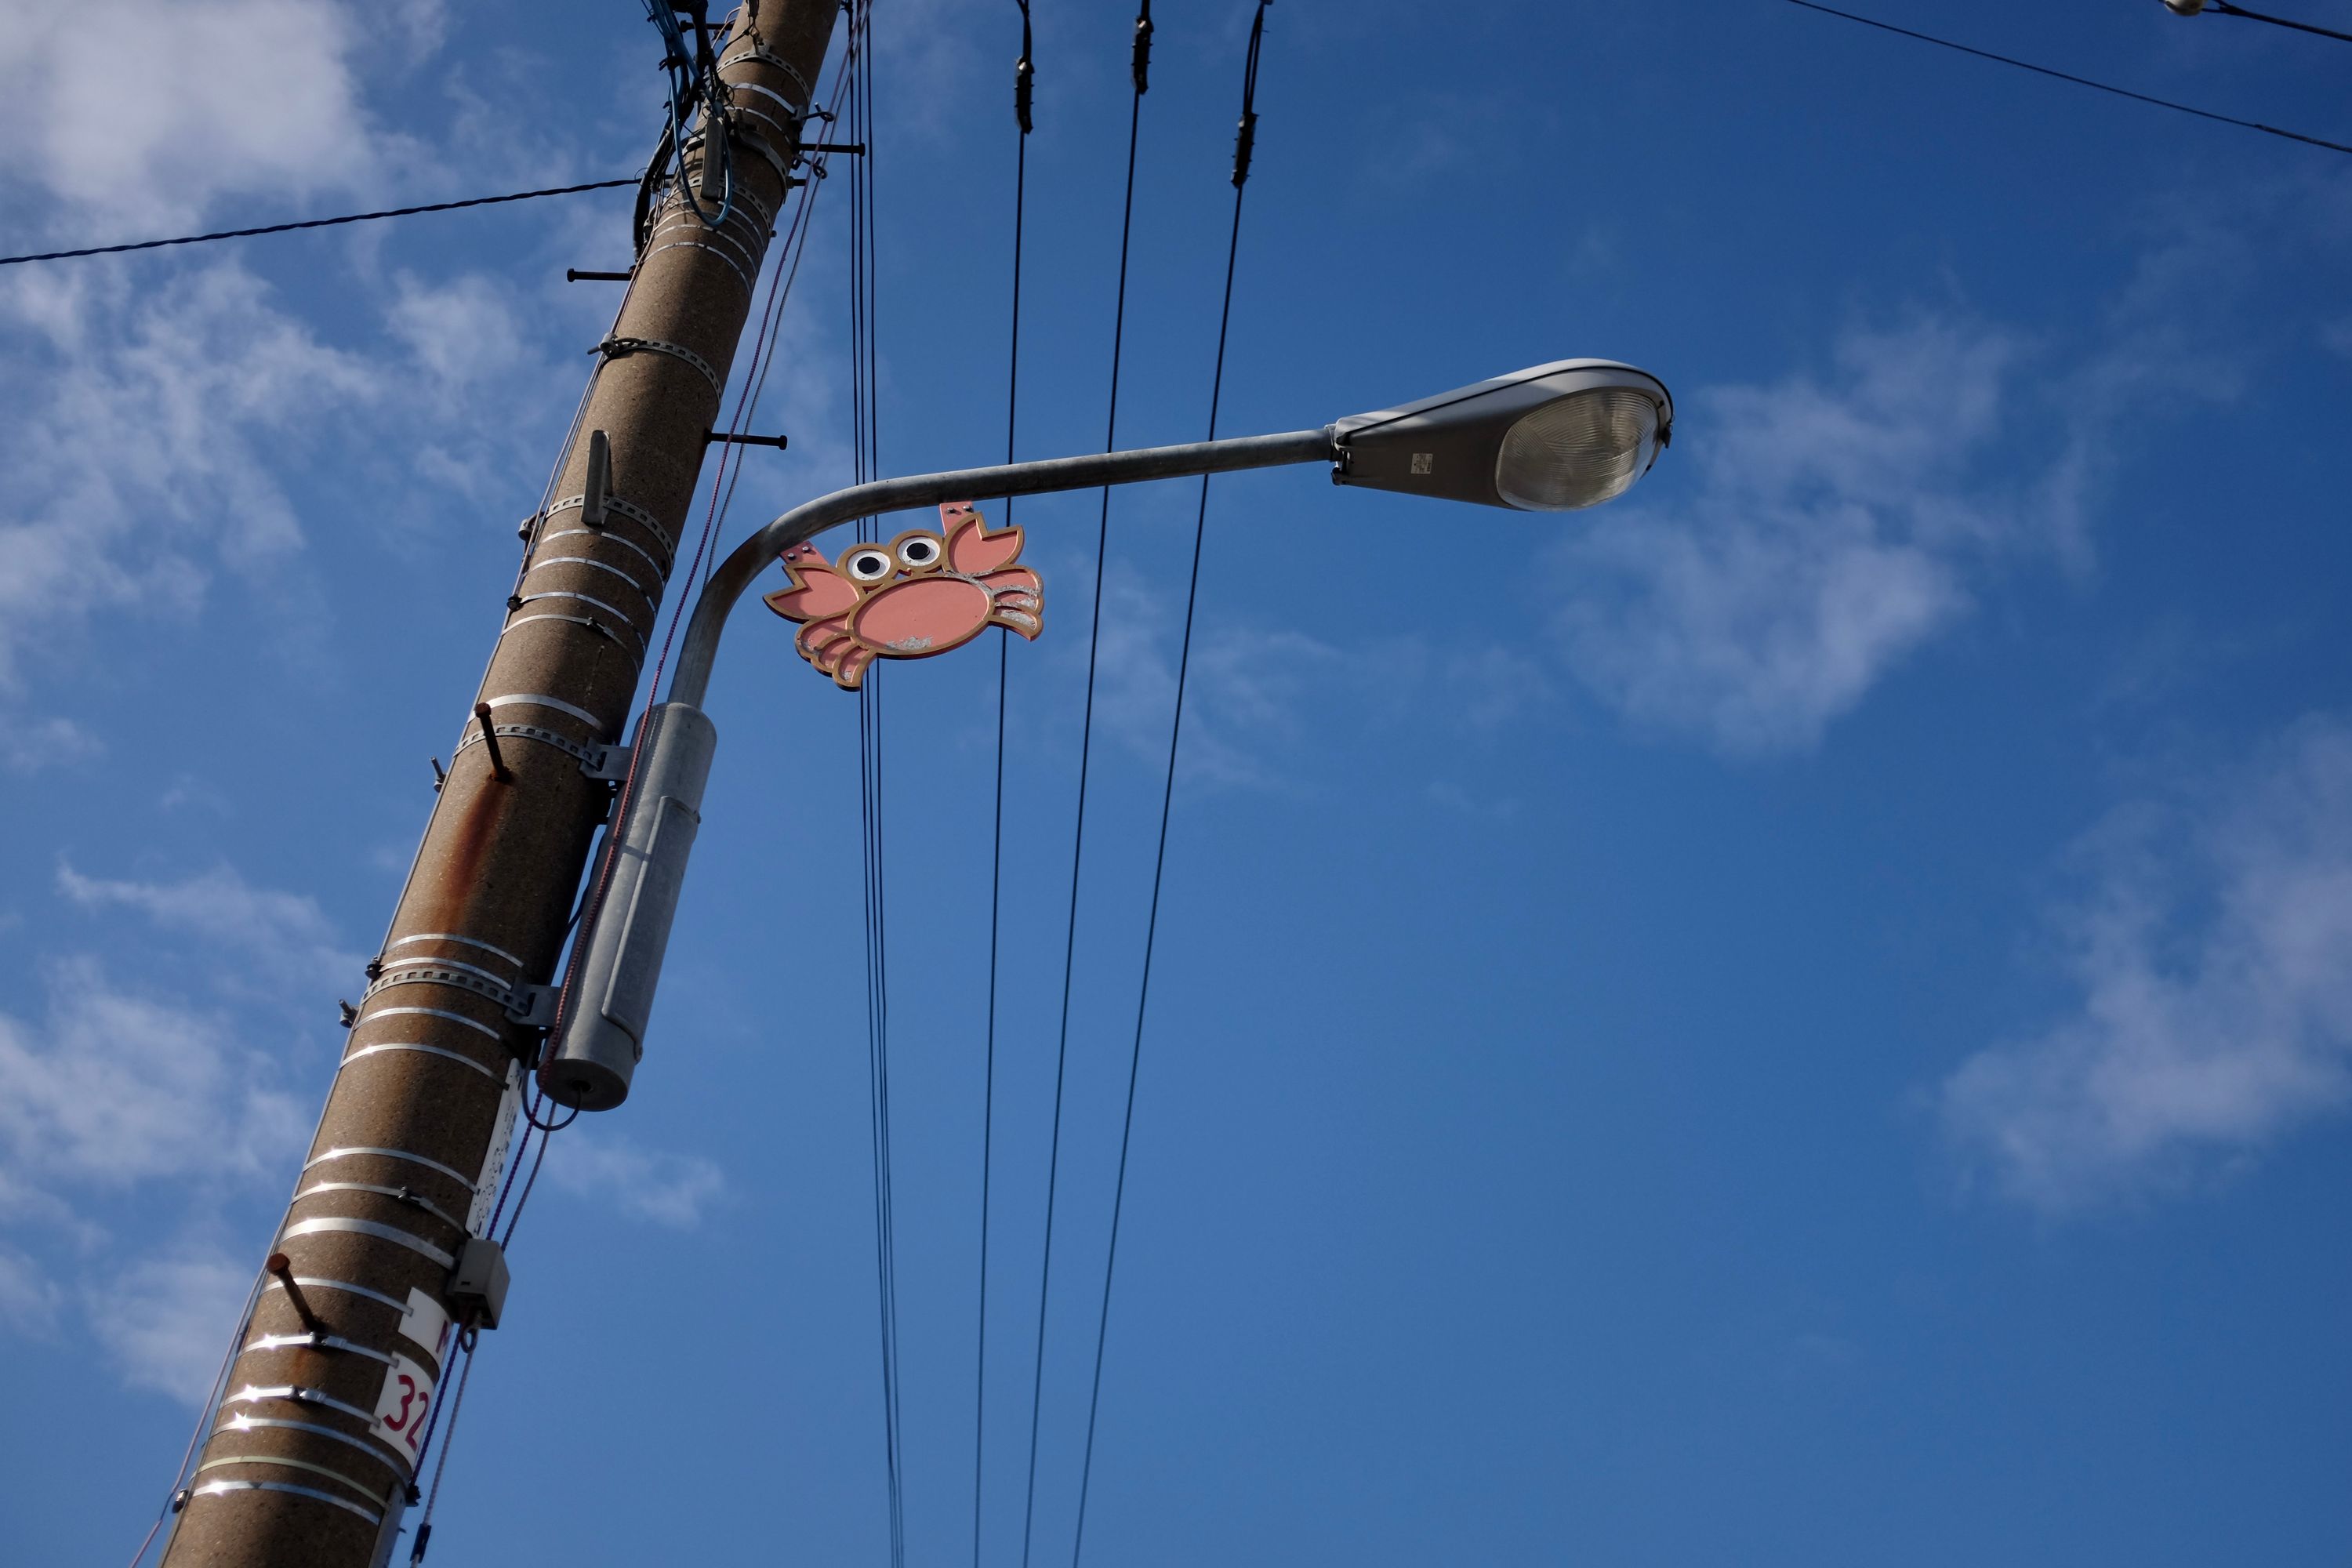 A red cartoon crab balances on a light pole.